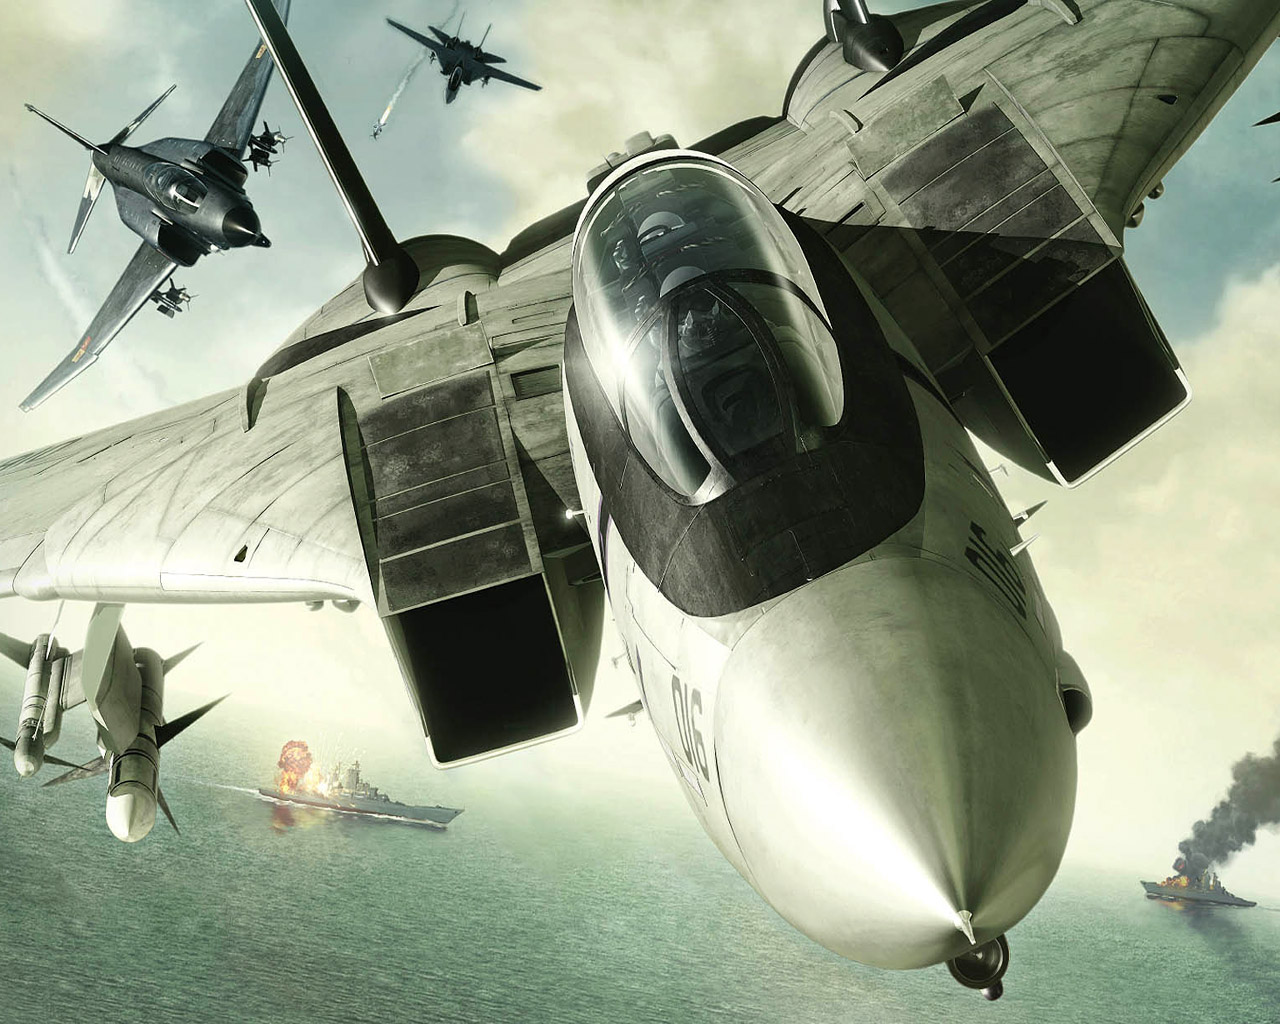 Grumman F14 Tomcat wallpapers HD  Download Free backgrounds